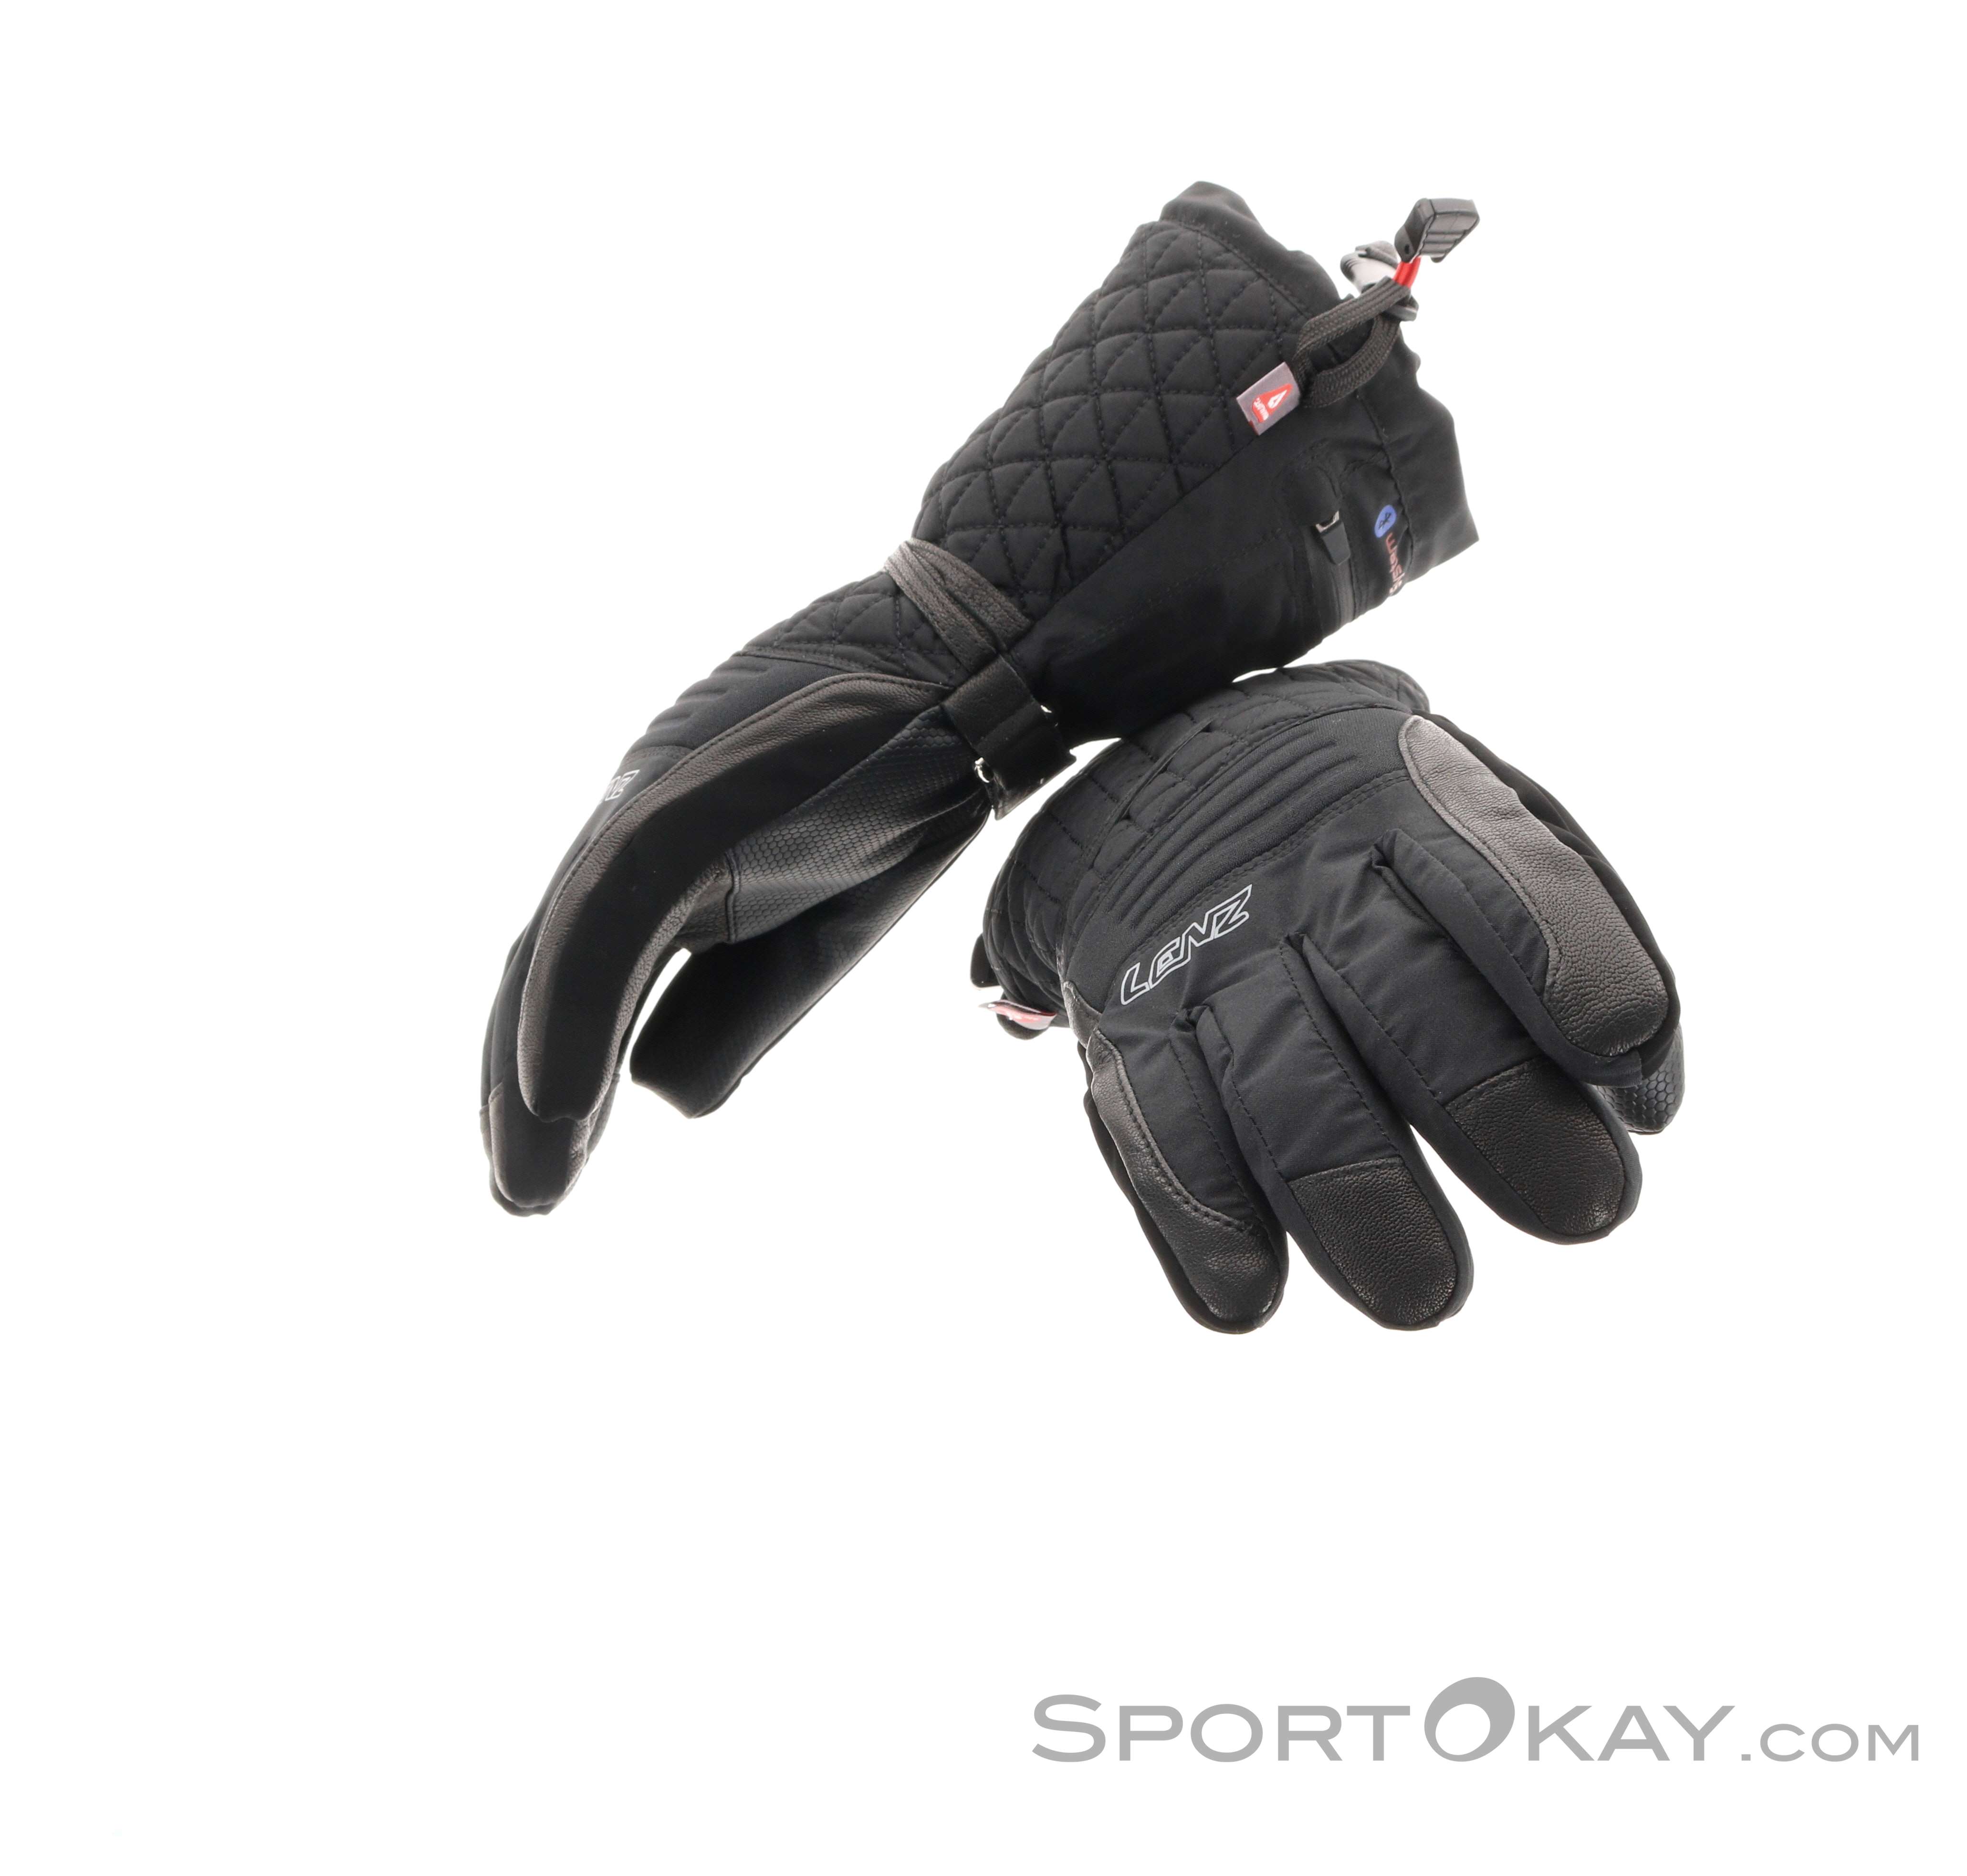 Lenz Heat glove 4.0 men - Gant chauffant homme